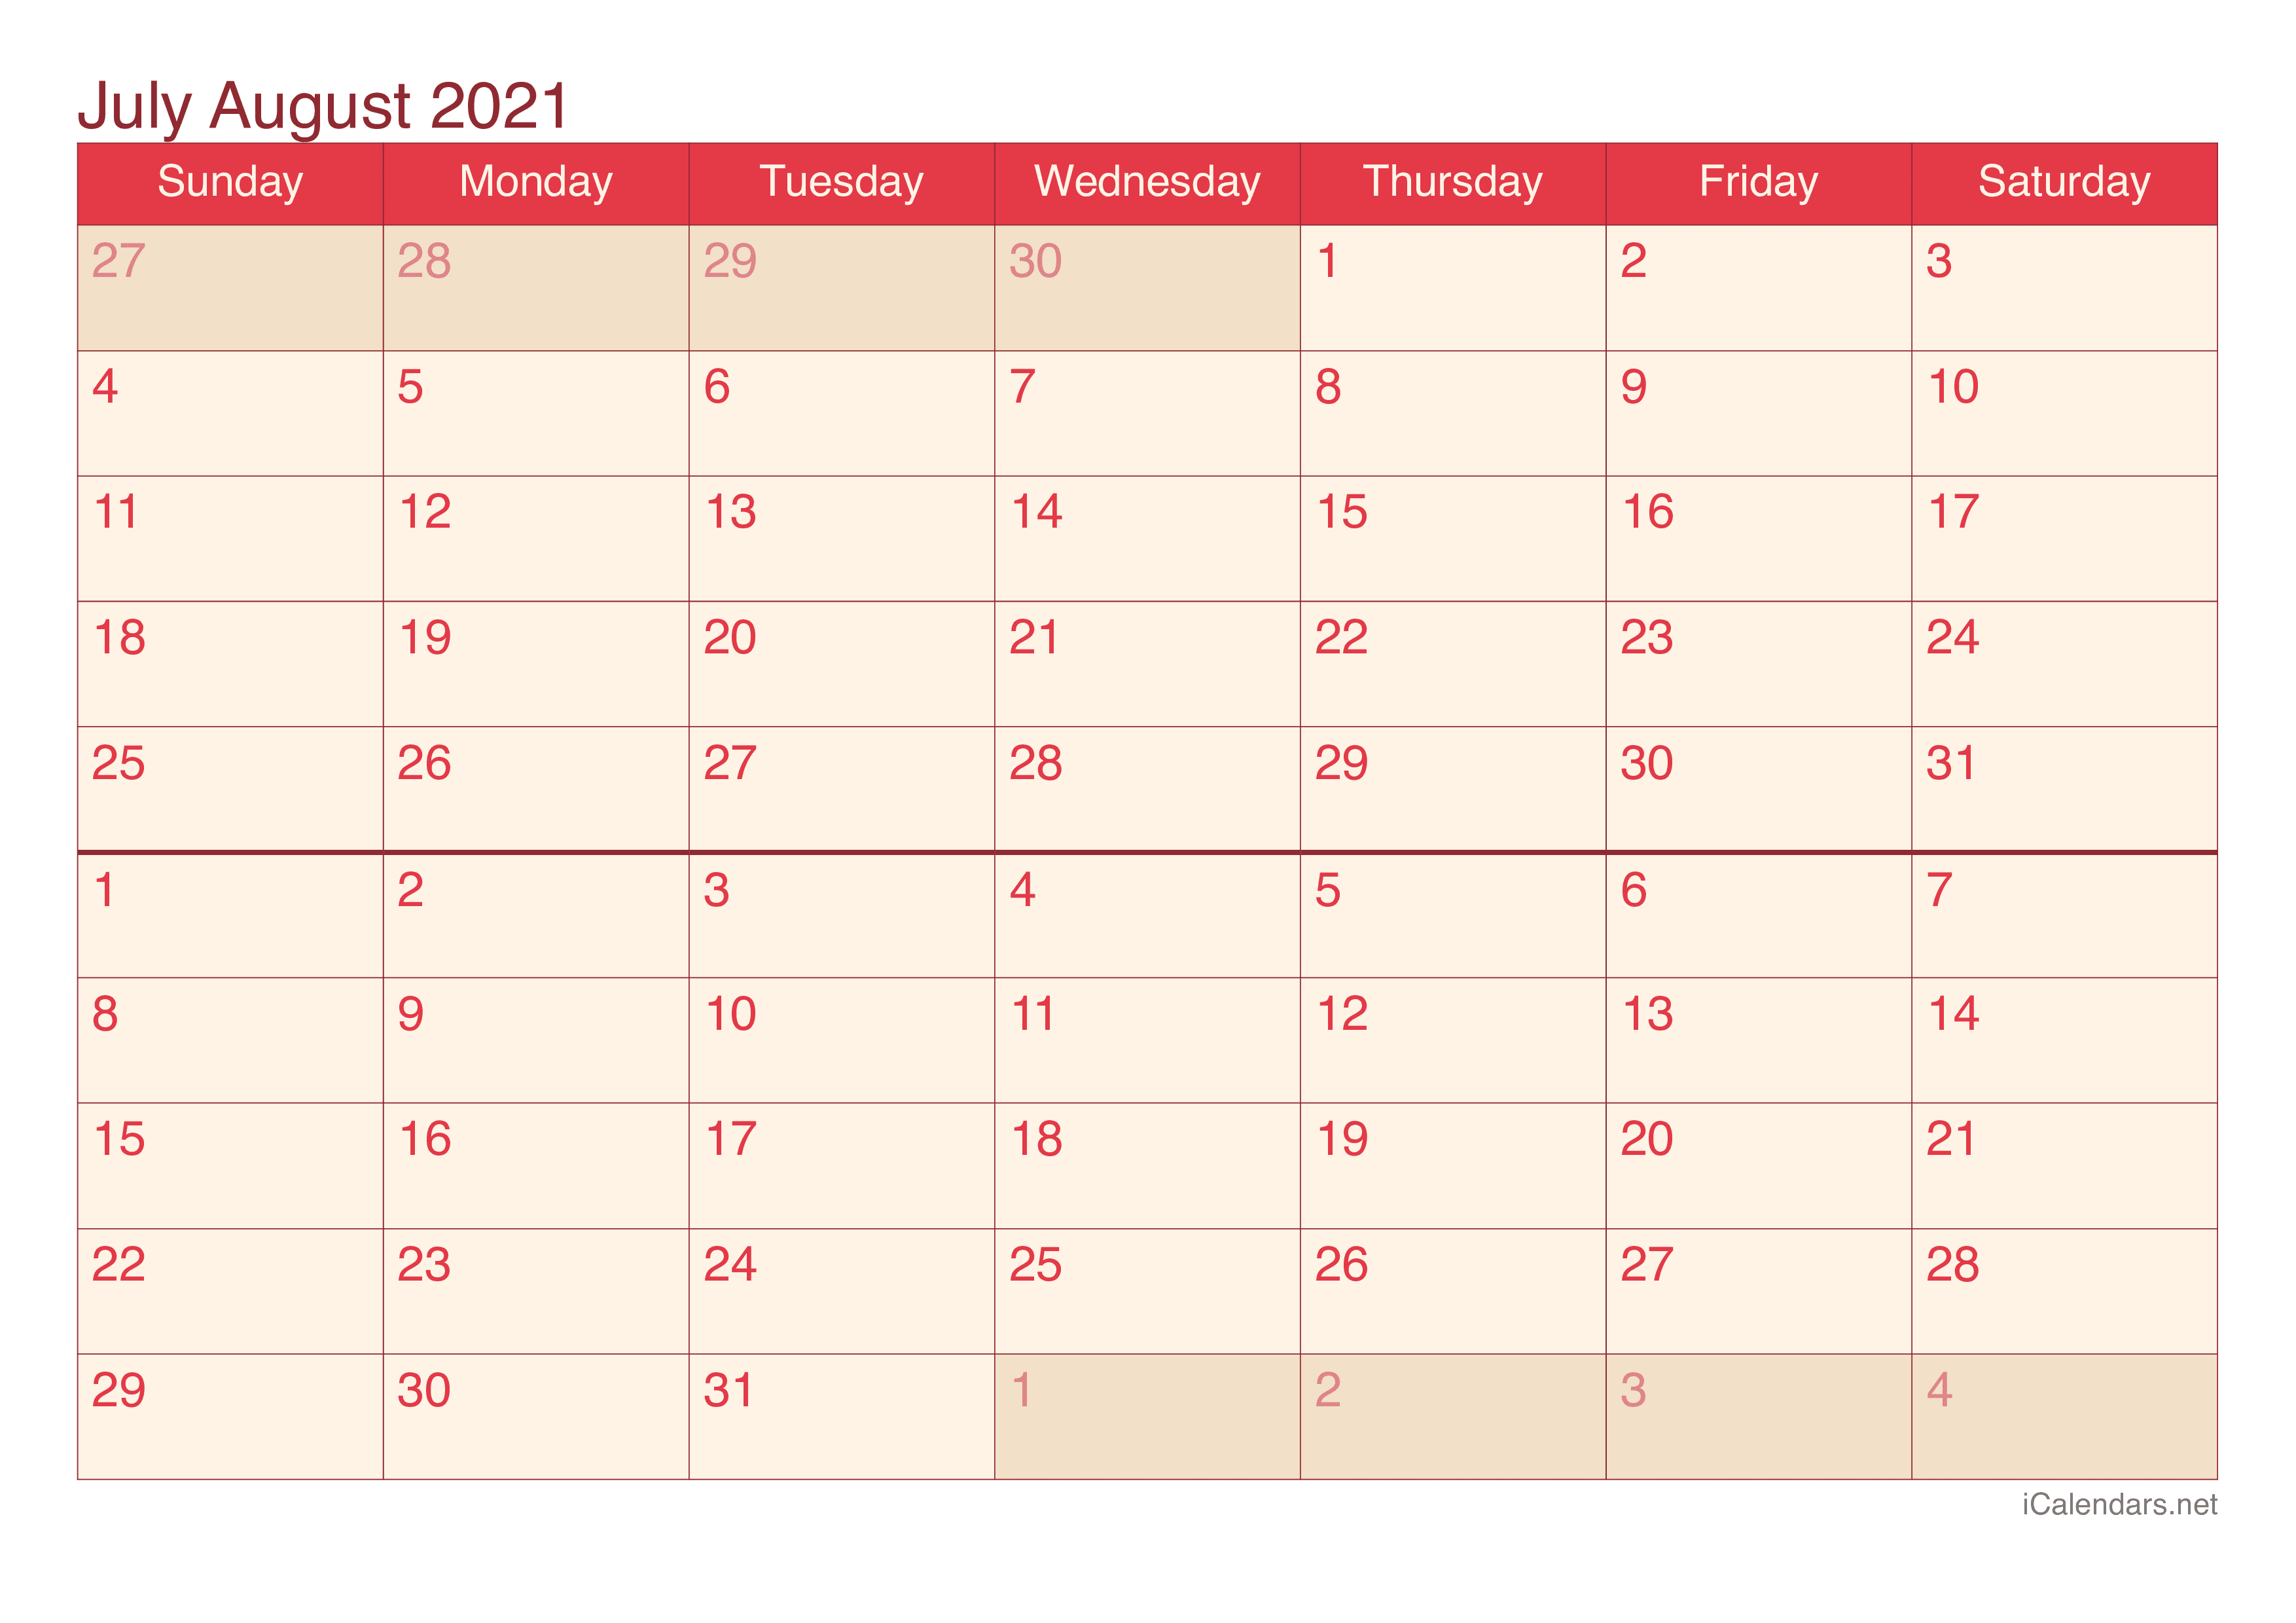 July and August 2021 Printable Calendar - icalendars.net